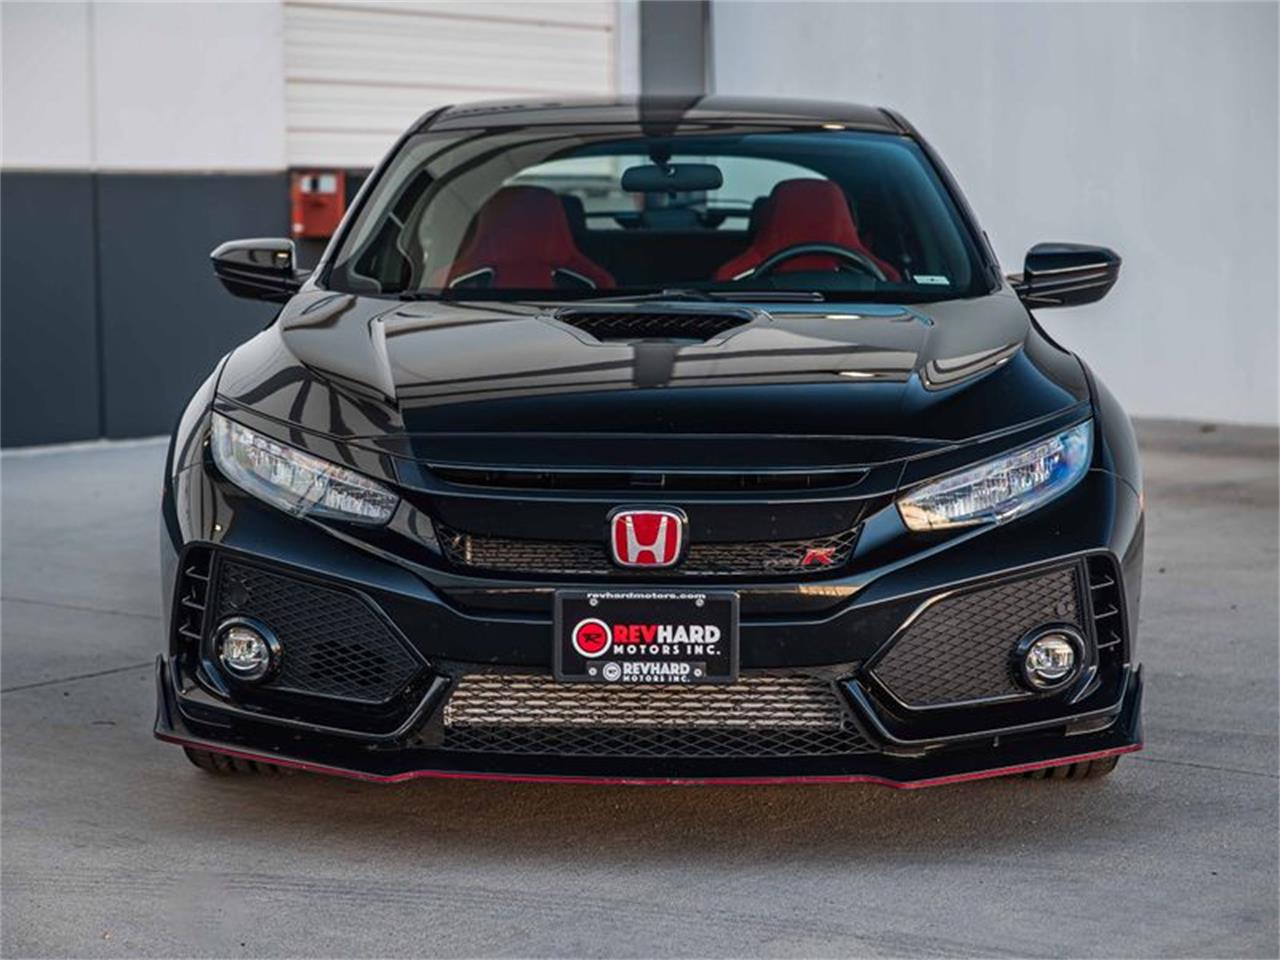 2018 Honda Civic for sale - Bloomer, WI - craigslist